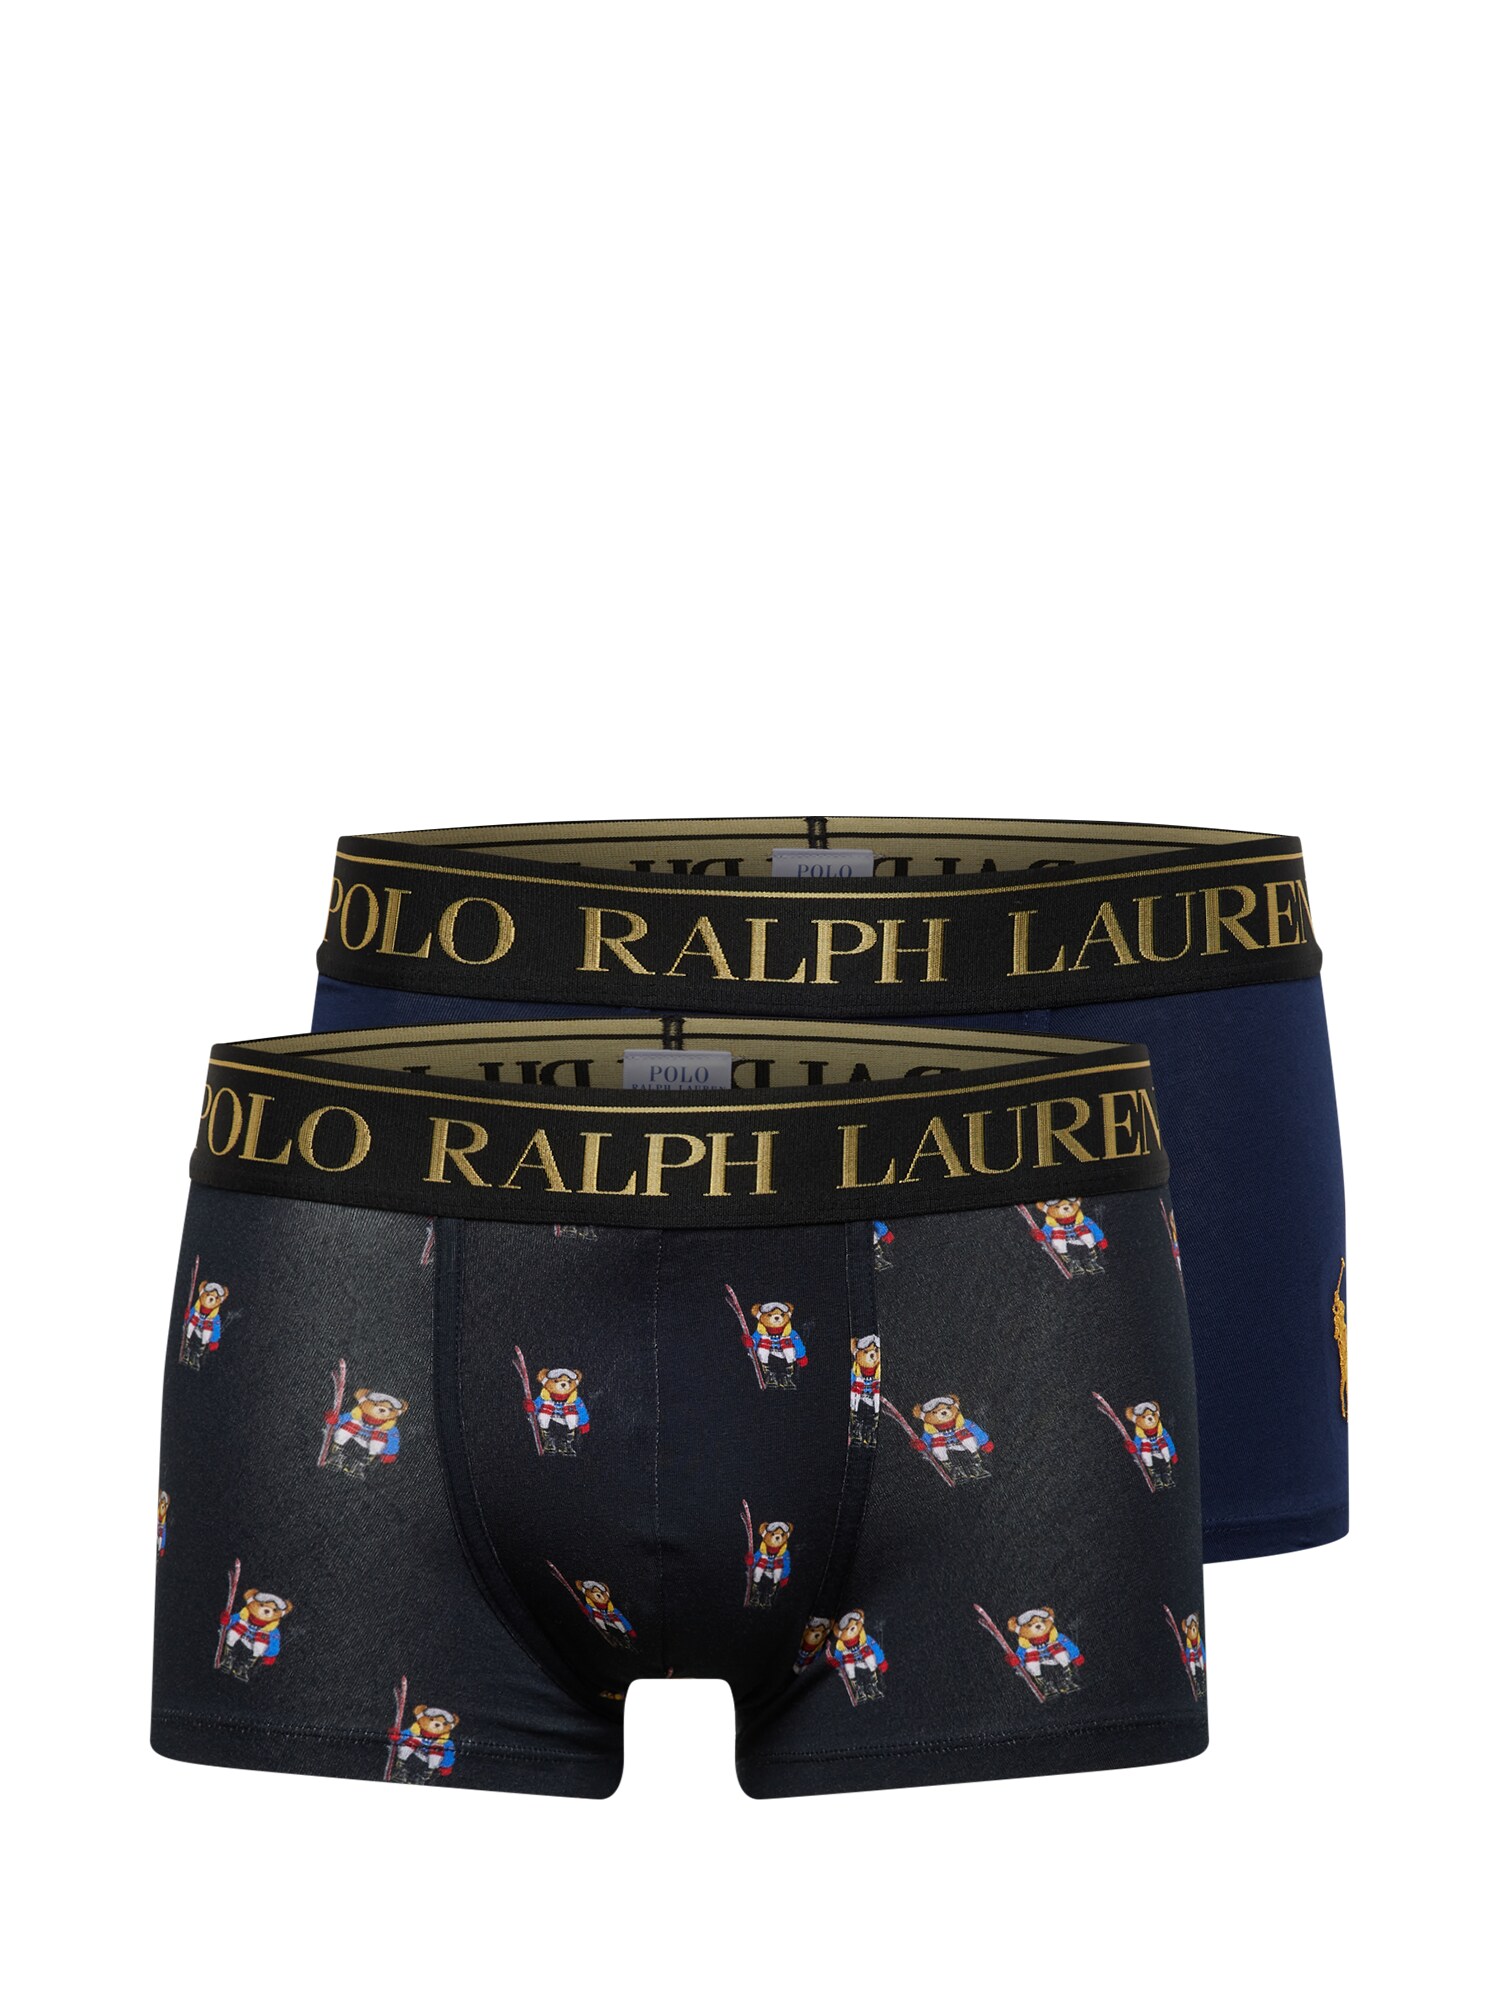 Polo Ralph Lauren Boxershorts schwarz / gold / navy